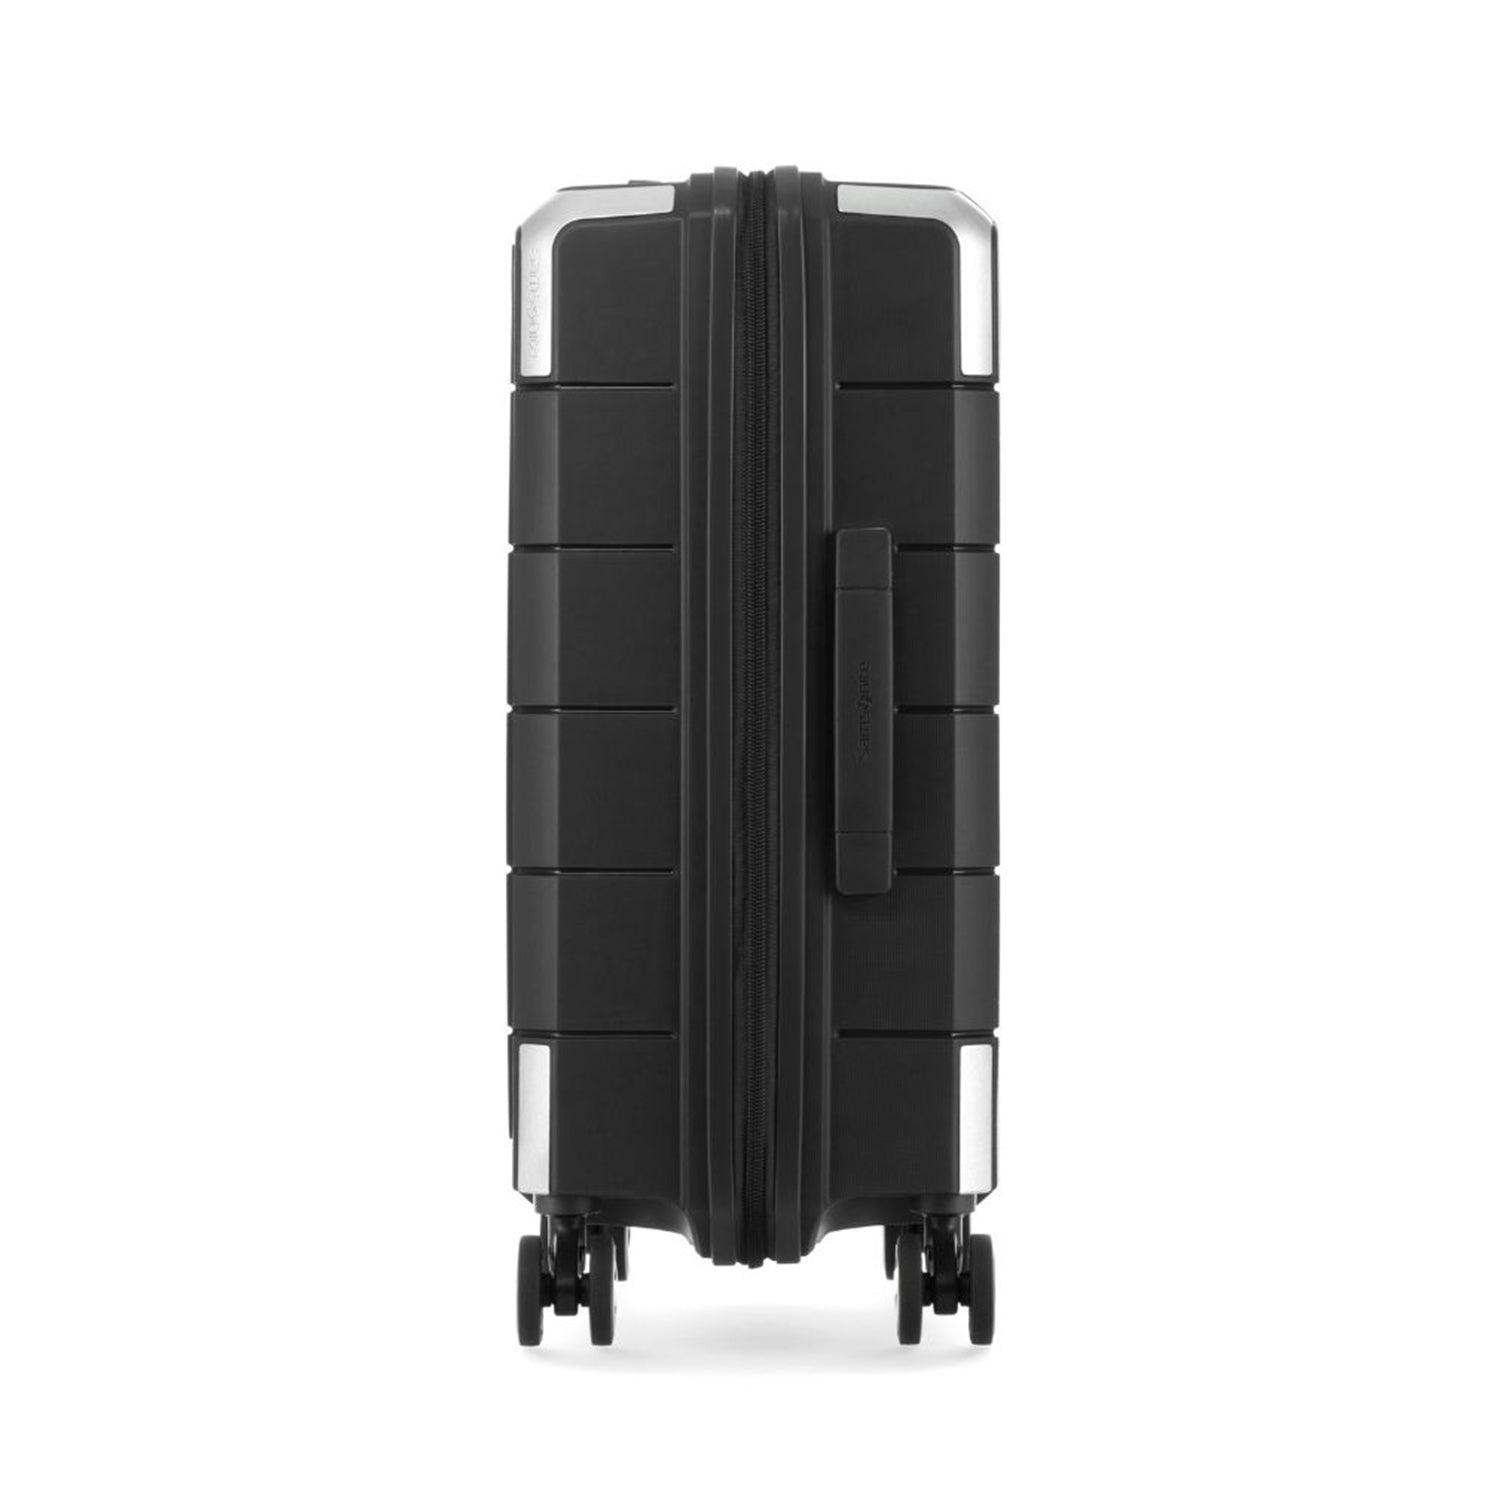 Samsonite CUBE-048 Spinner 55/20 Front Pocket Luggage